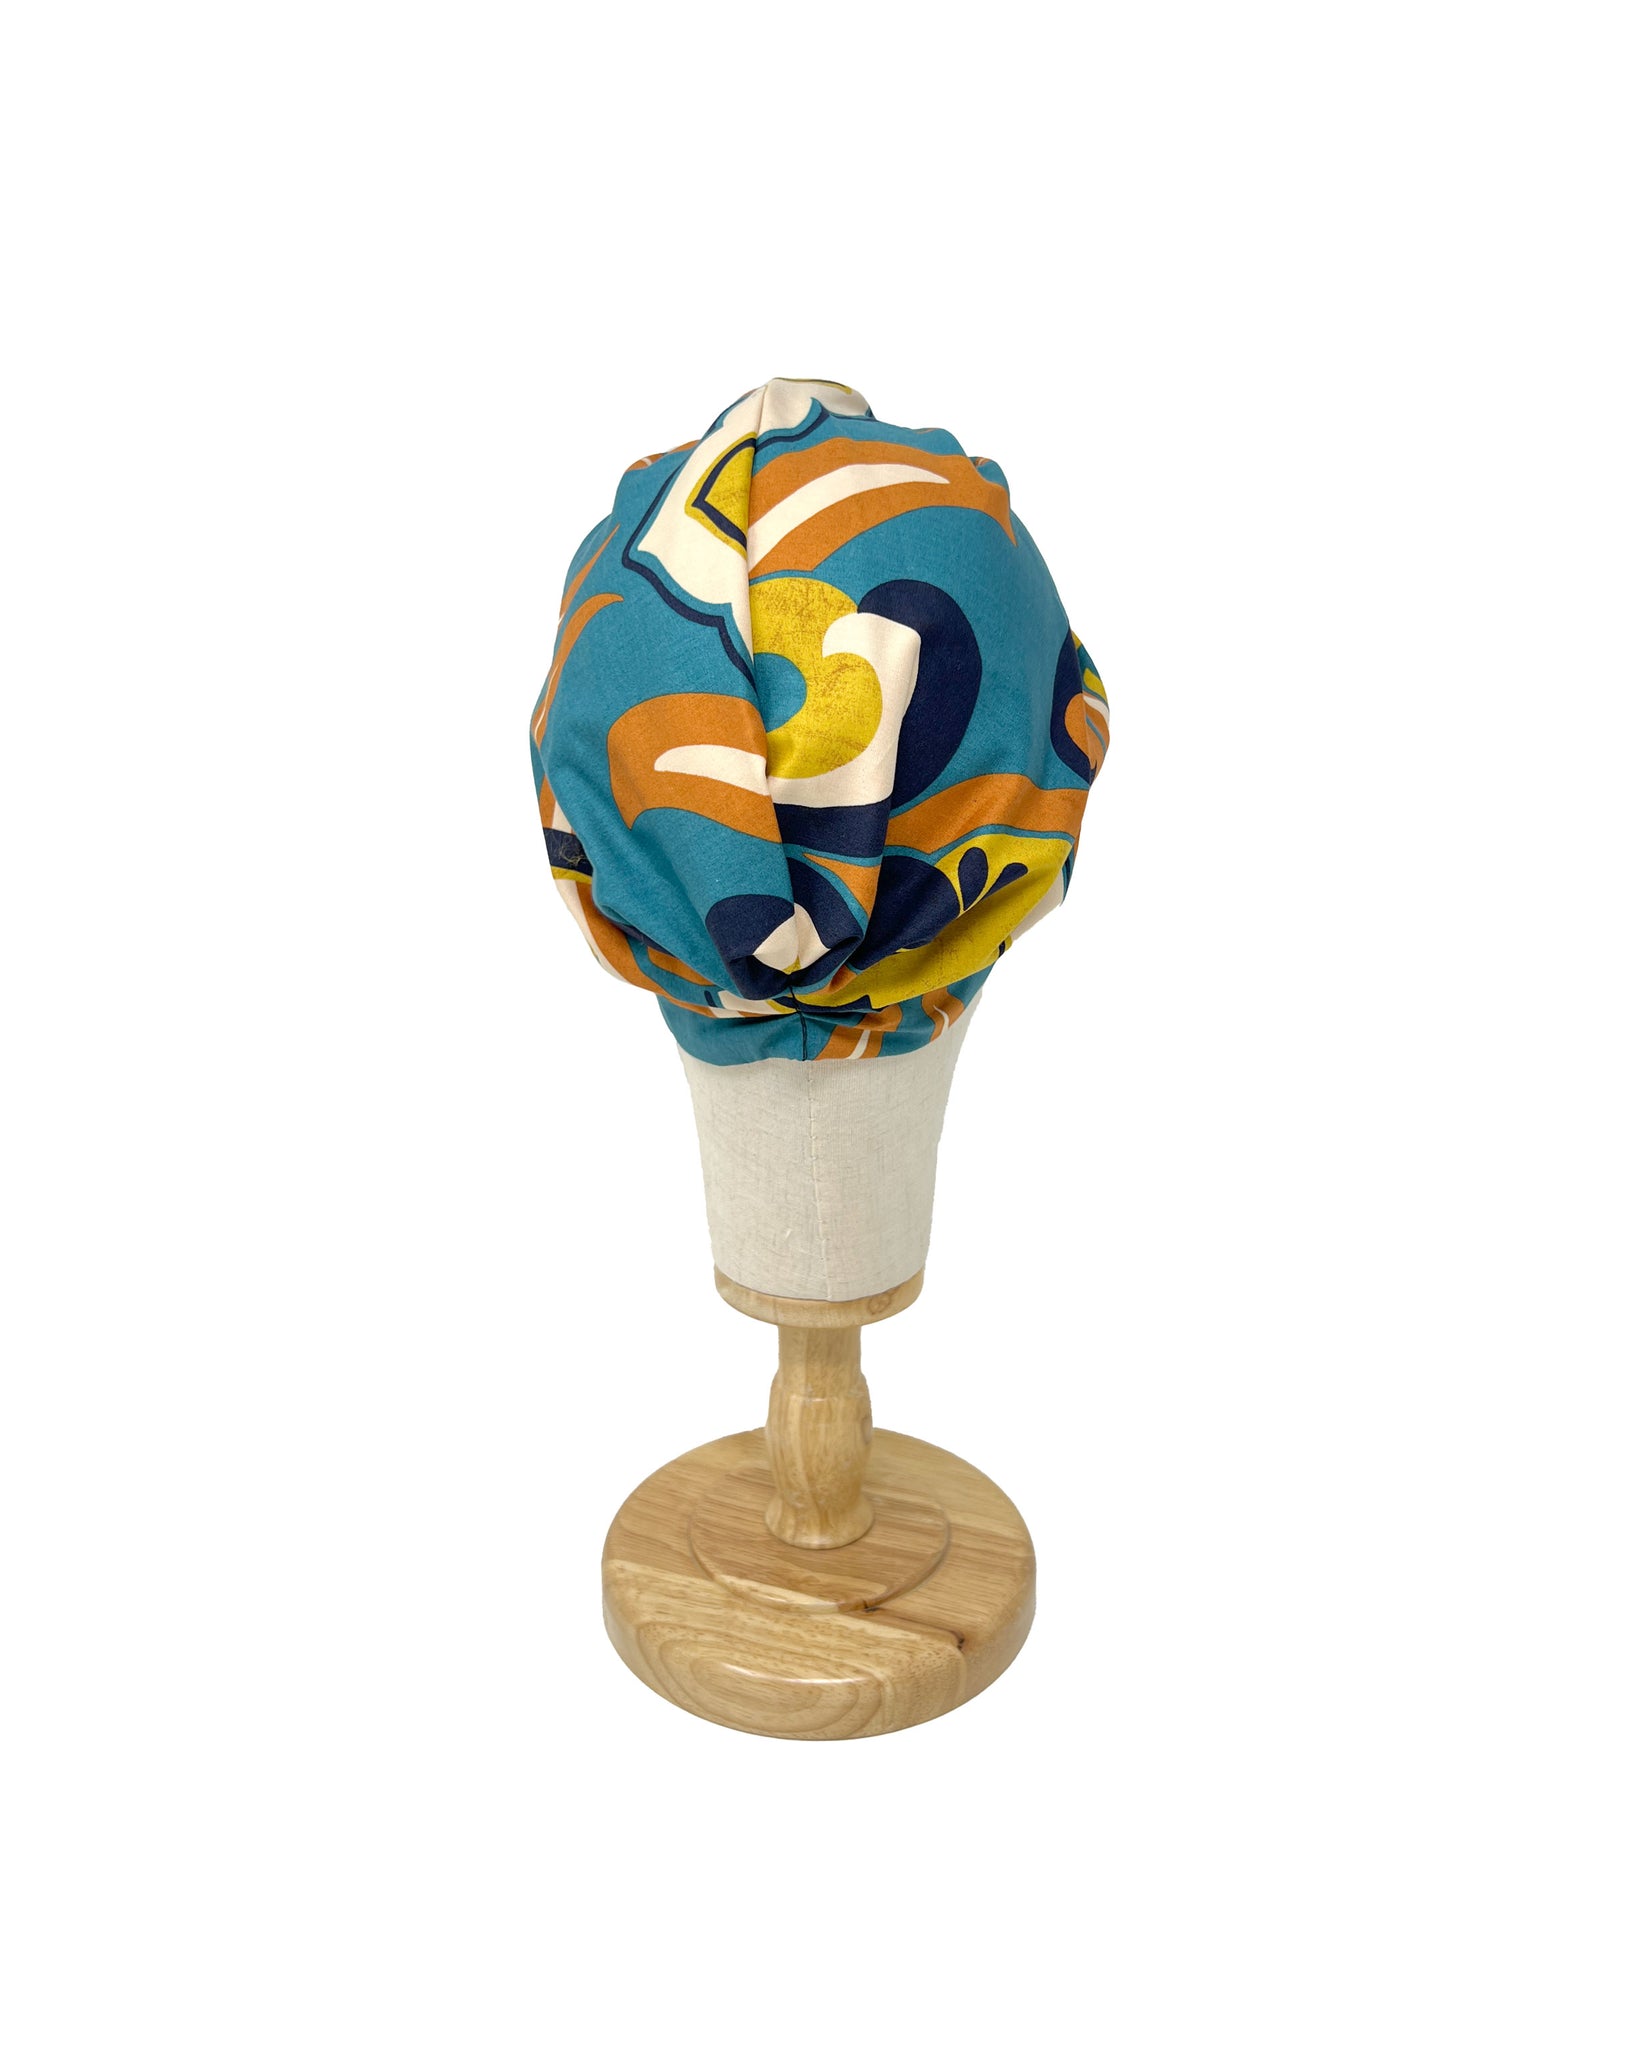 Octanium cotton turban with orange yellow and blue cashmere design